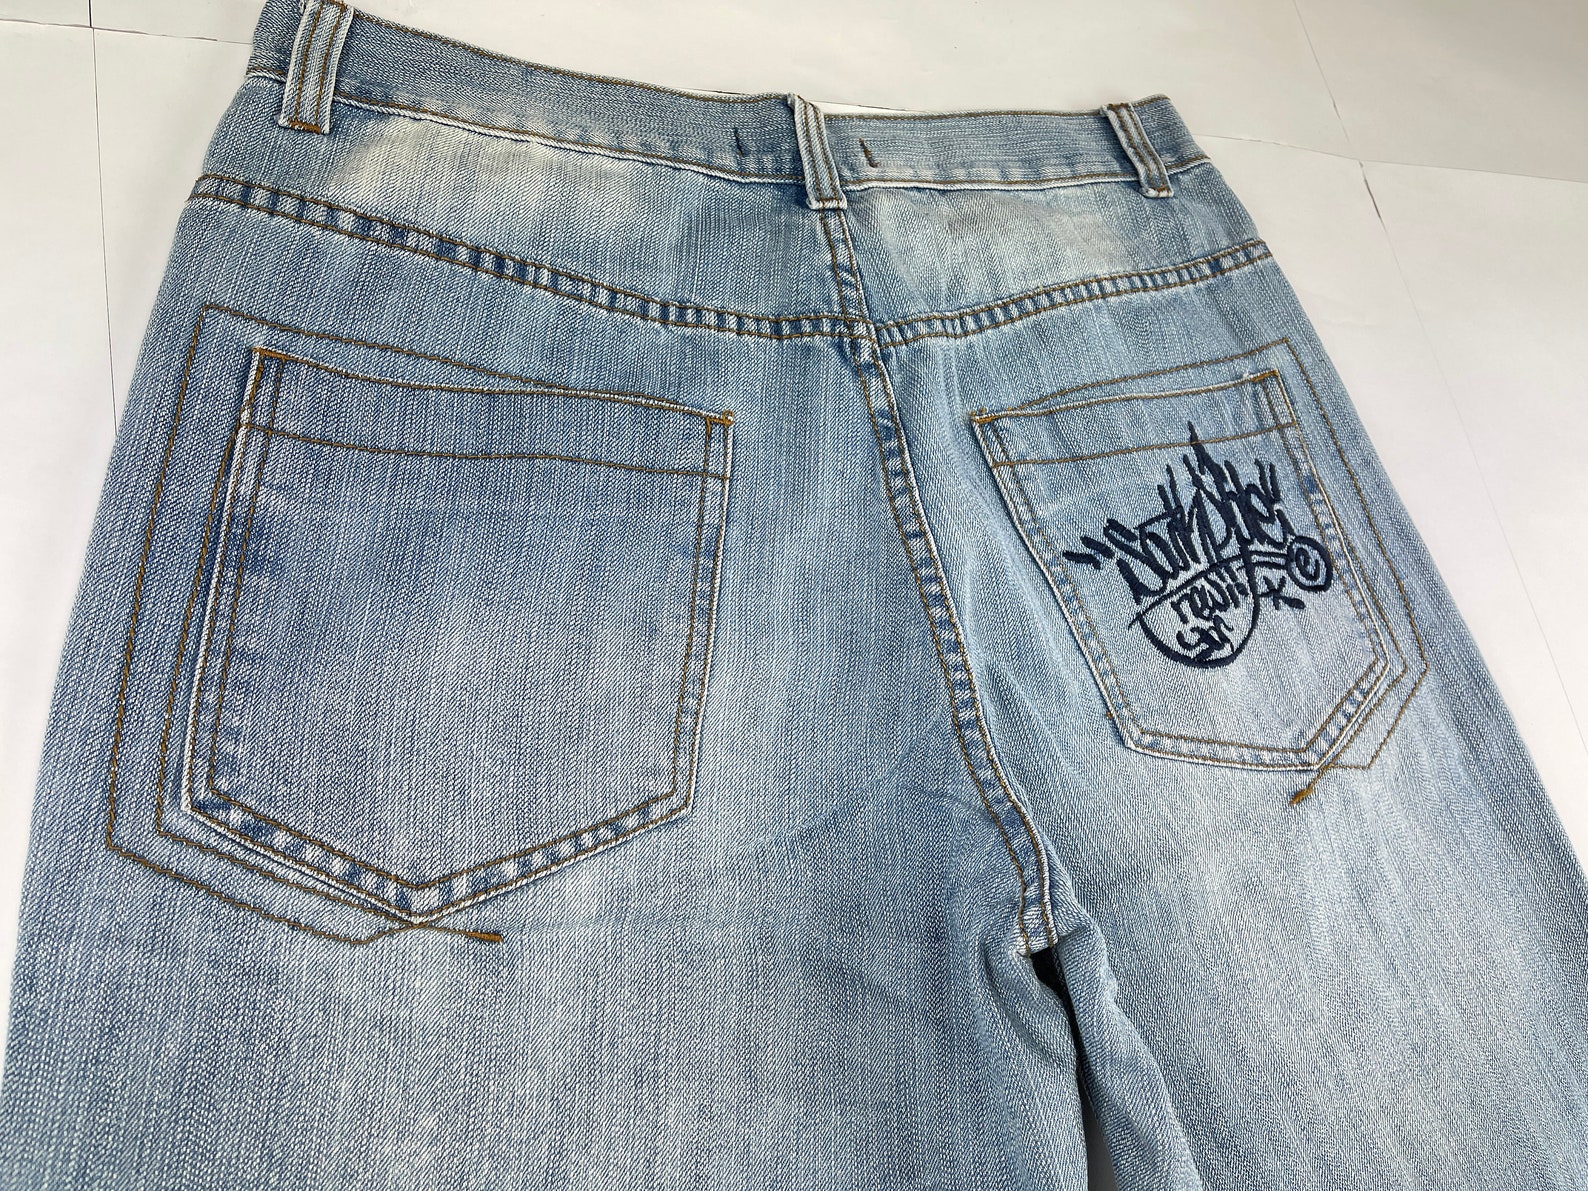 Southpole Shorts Vintage South Pole Jeans Shorts 90s Hip Hop | Etsy